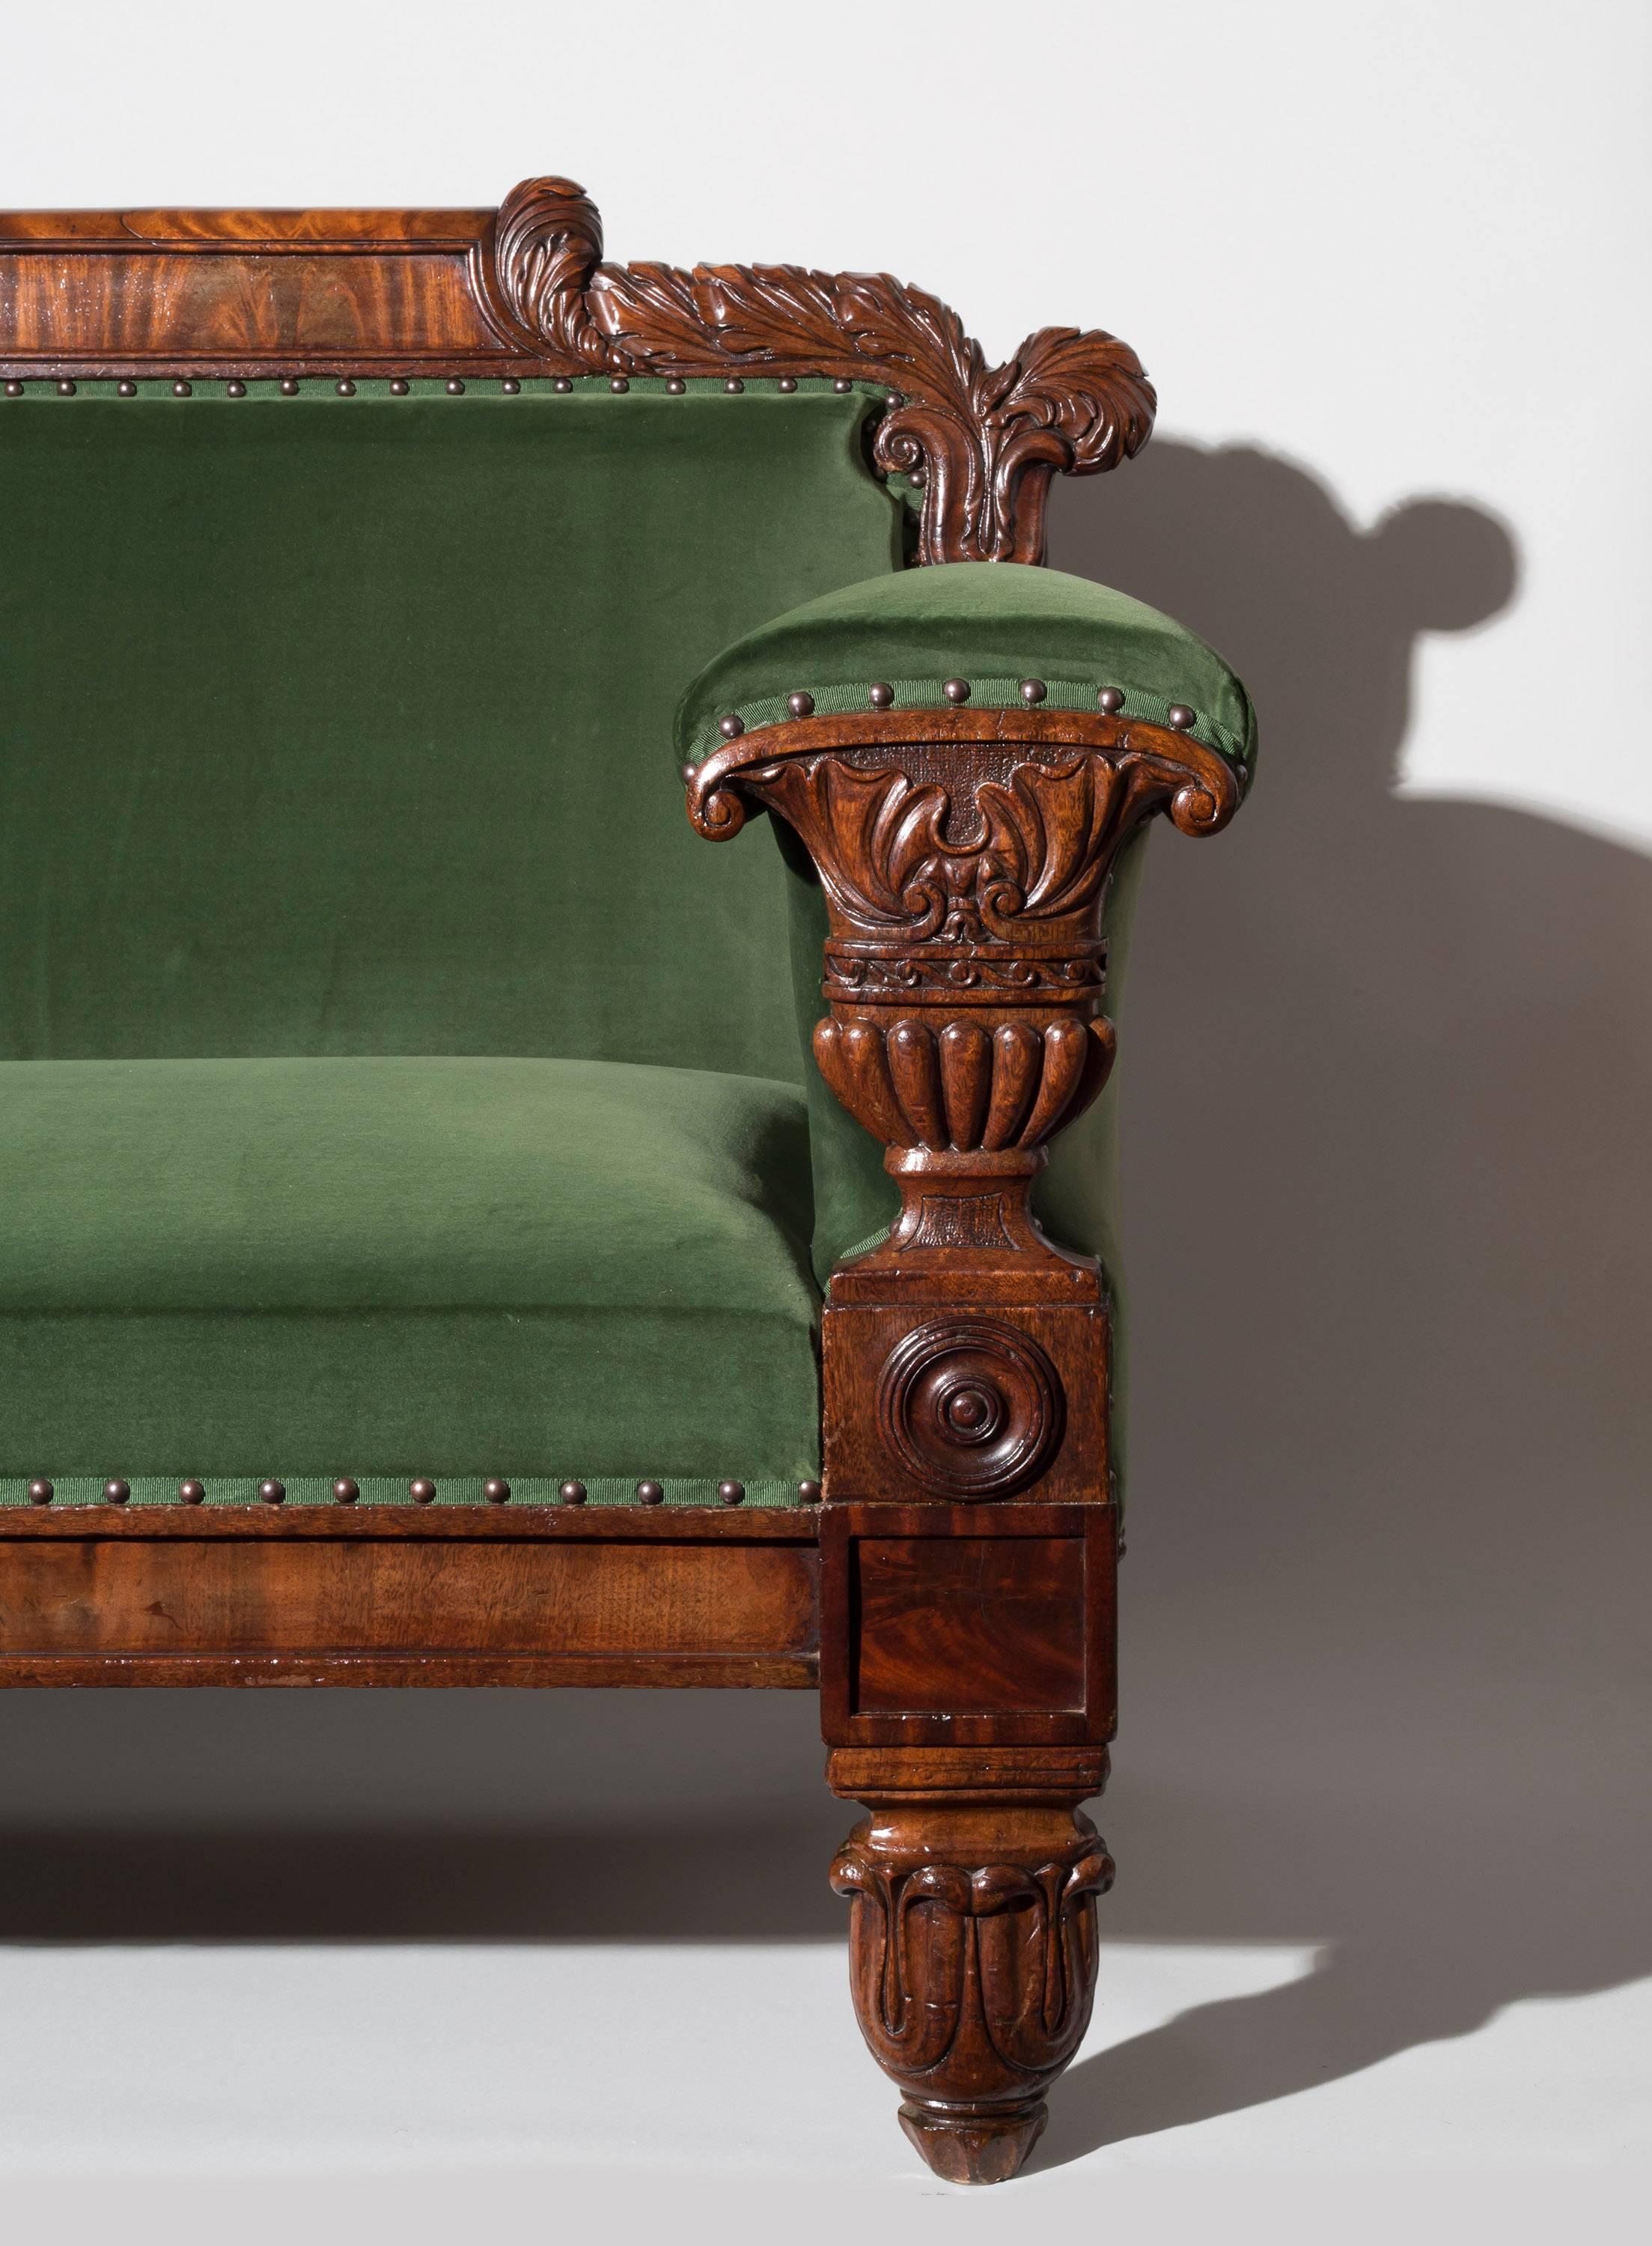 Greek Revival English 19th Century Regency Mahogany Sofa in Green Velvet Design by John Taylor